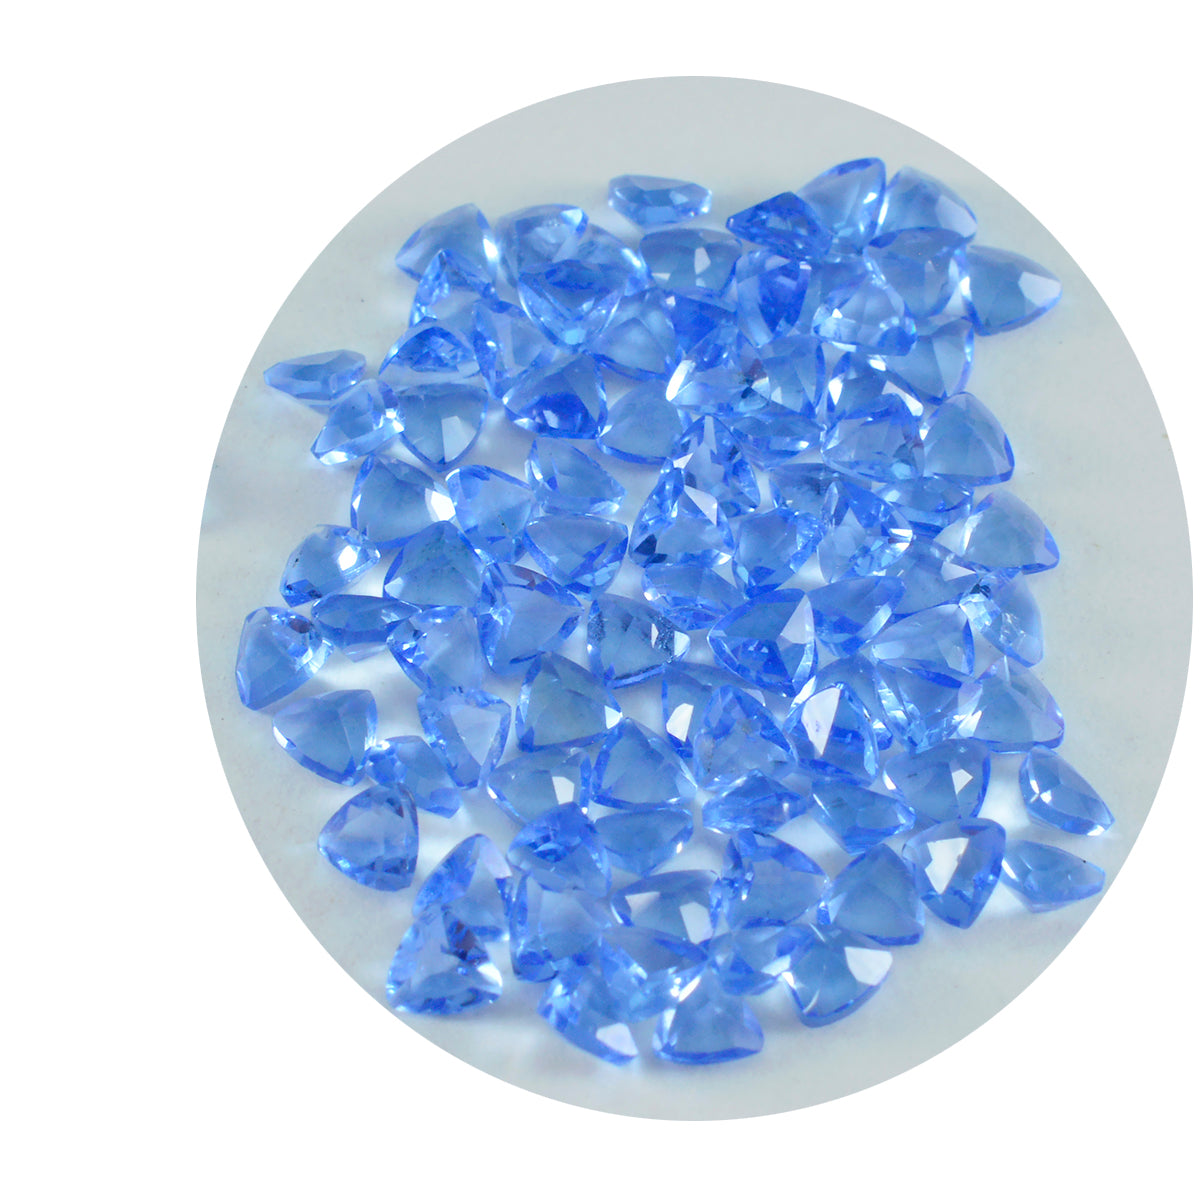 Riyogems 1PC Blue Sapphire CZ Faceted 4x4 mm Trillion Shape handsome Quality Gemstone